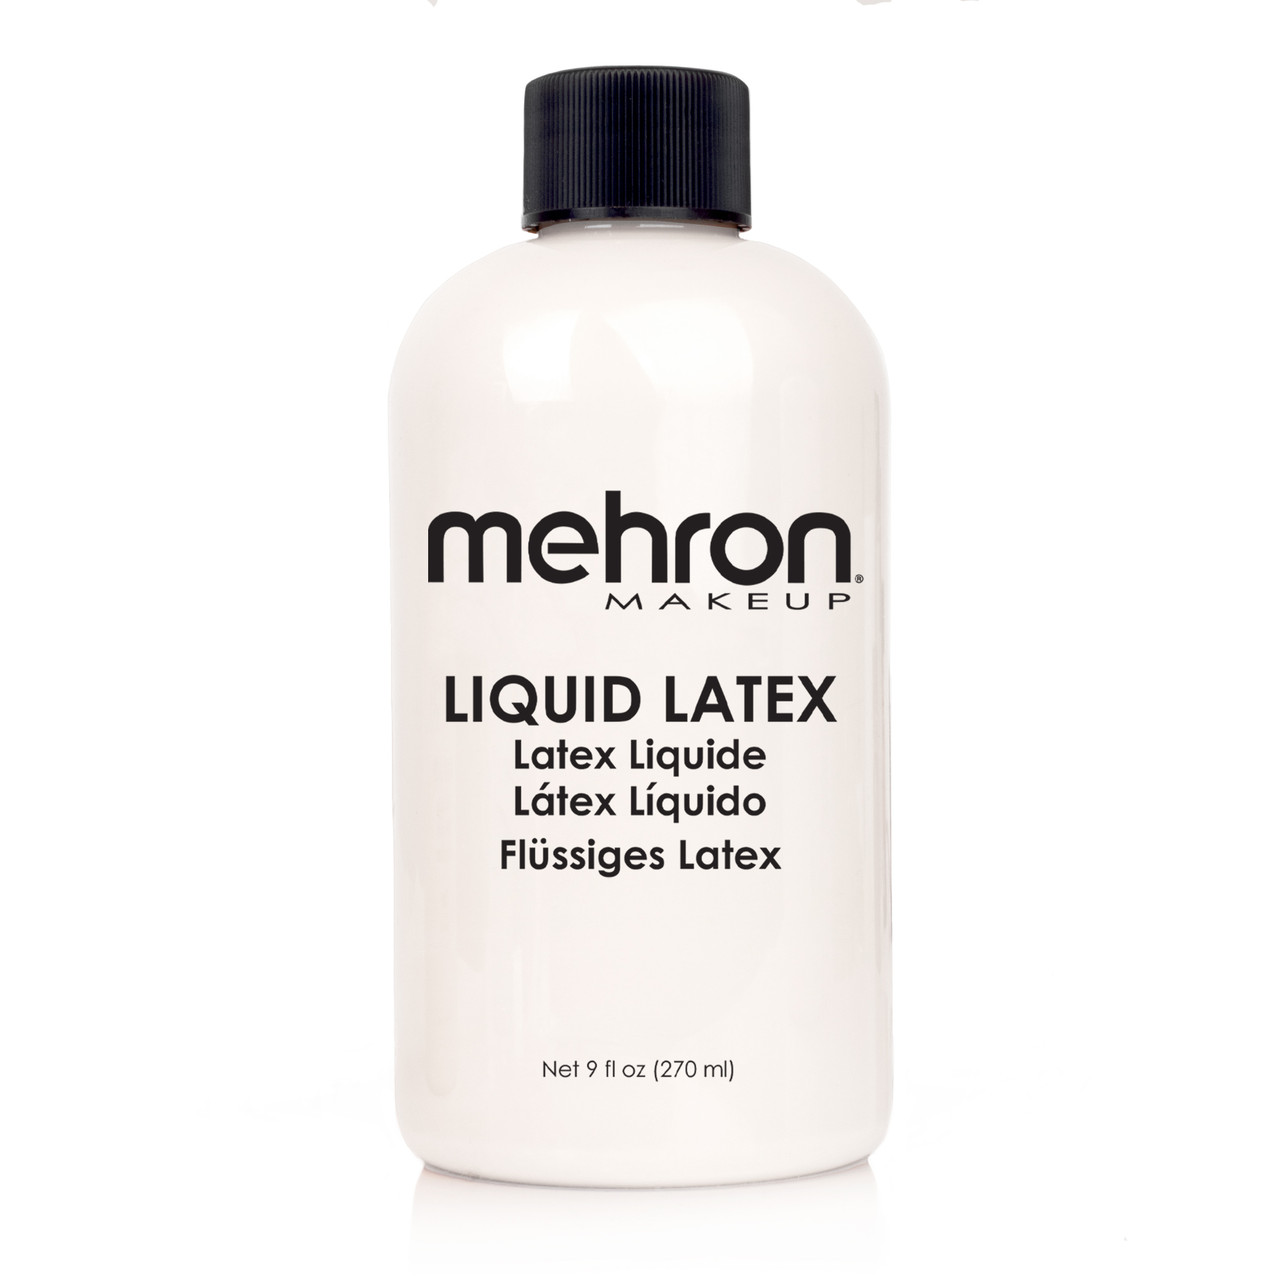 Liquid Latex Mehron Makeup